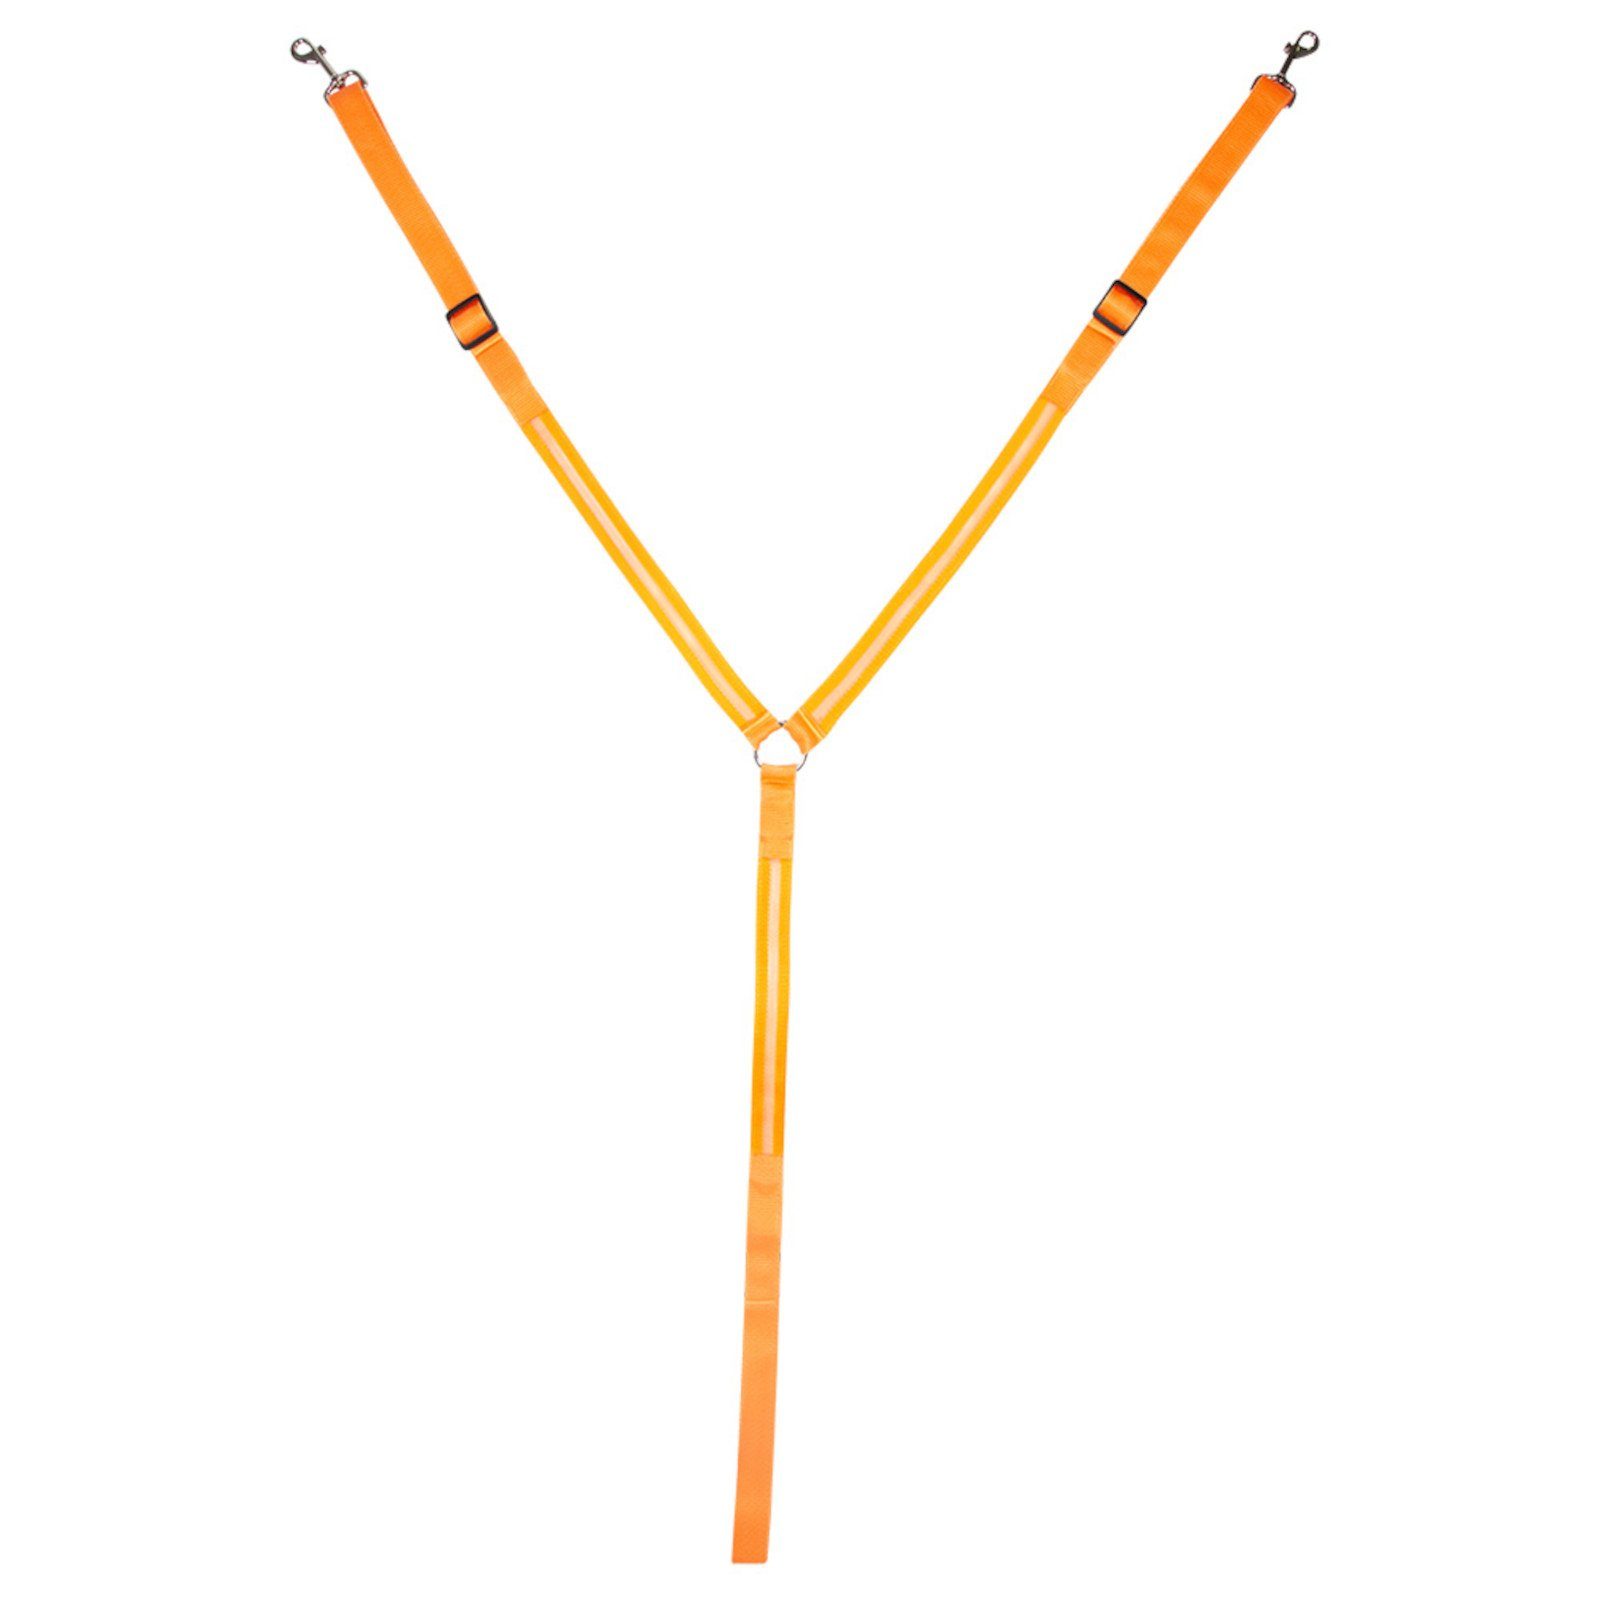 PFIFF Vorderzeug (orange Warmblut, Reflektions-Vorderzeug orange - - - LED Pfiff Warmblut)